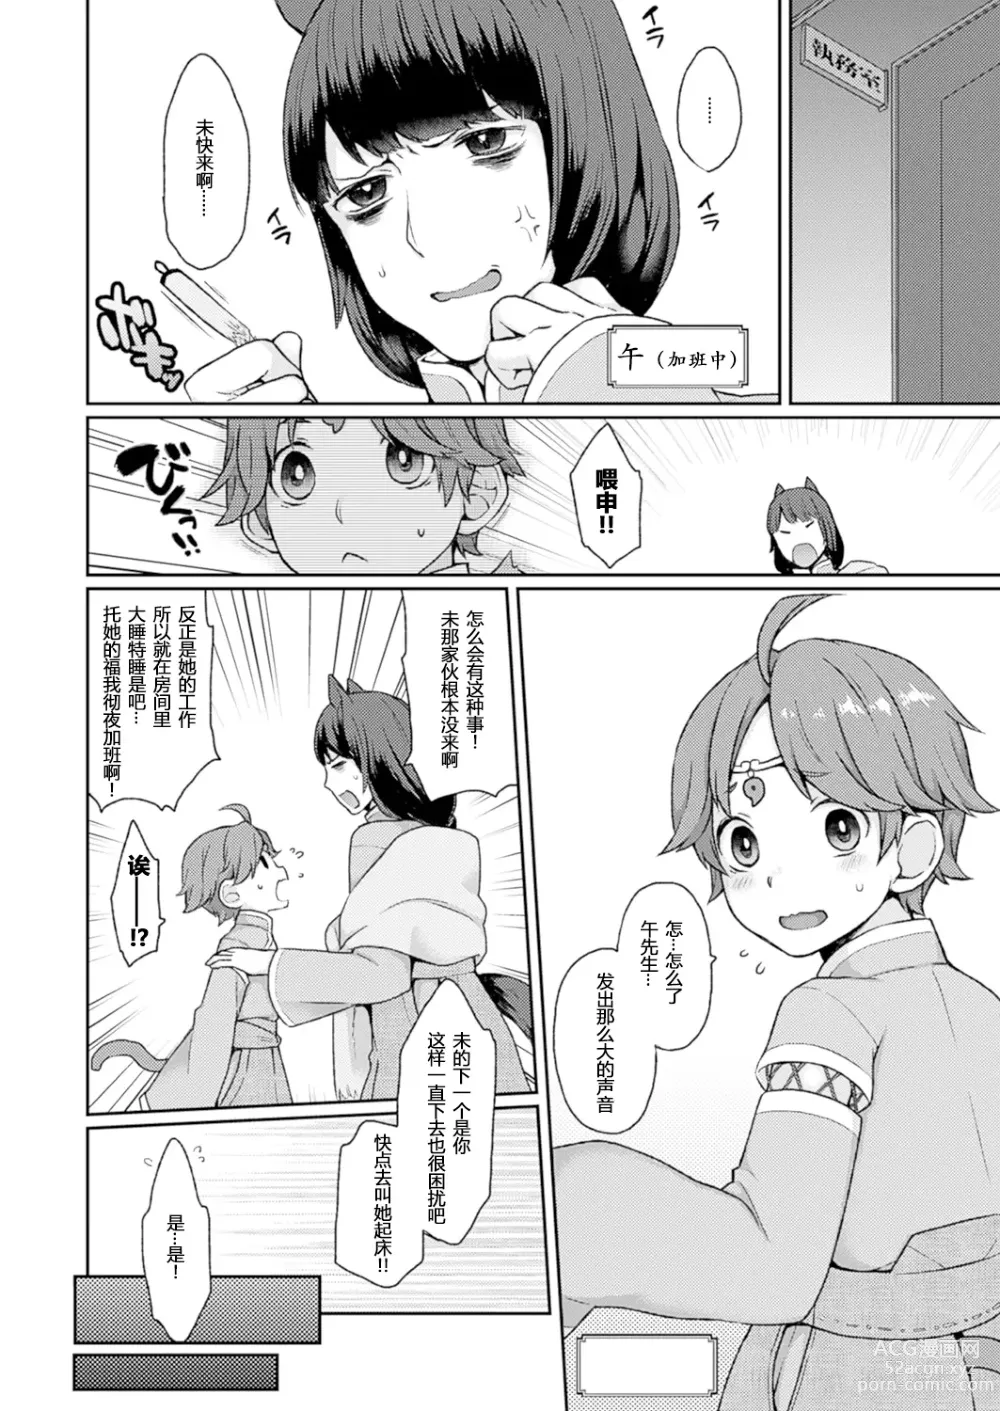 Page 2 of manga 酣睡的羊神